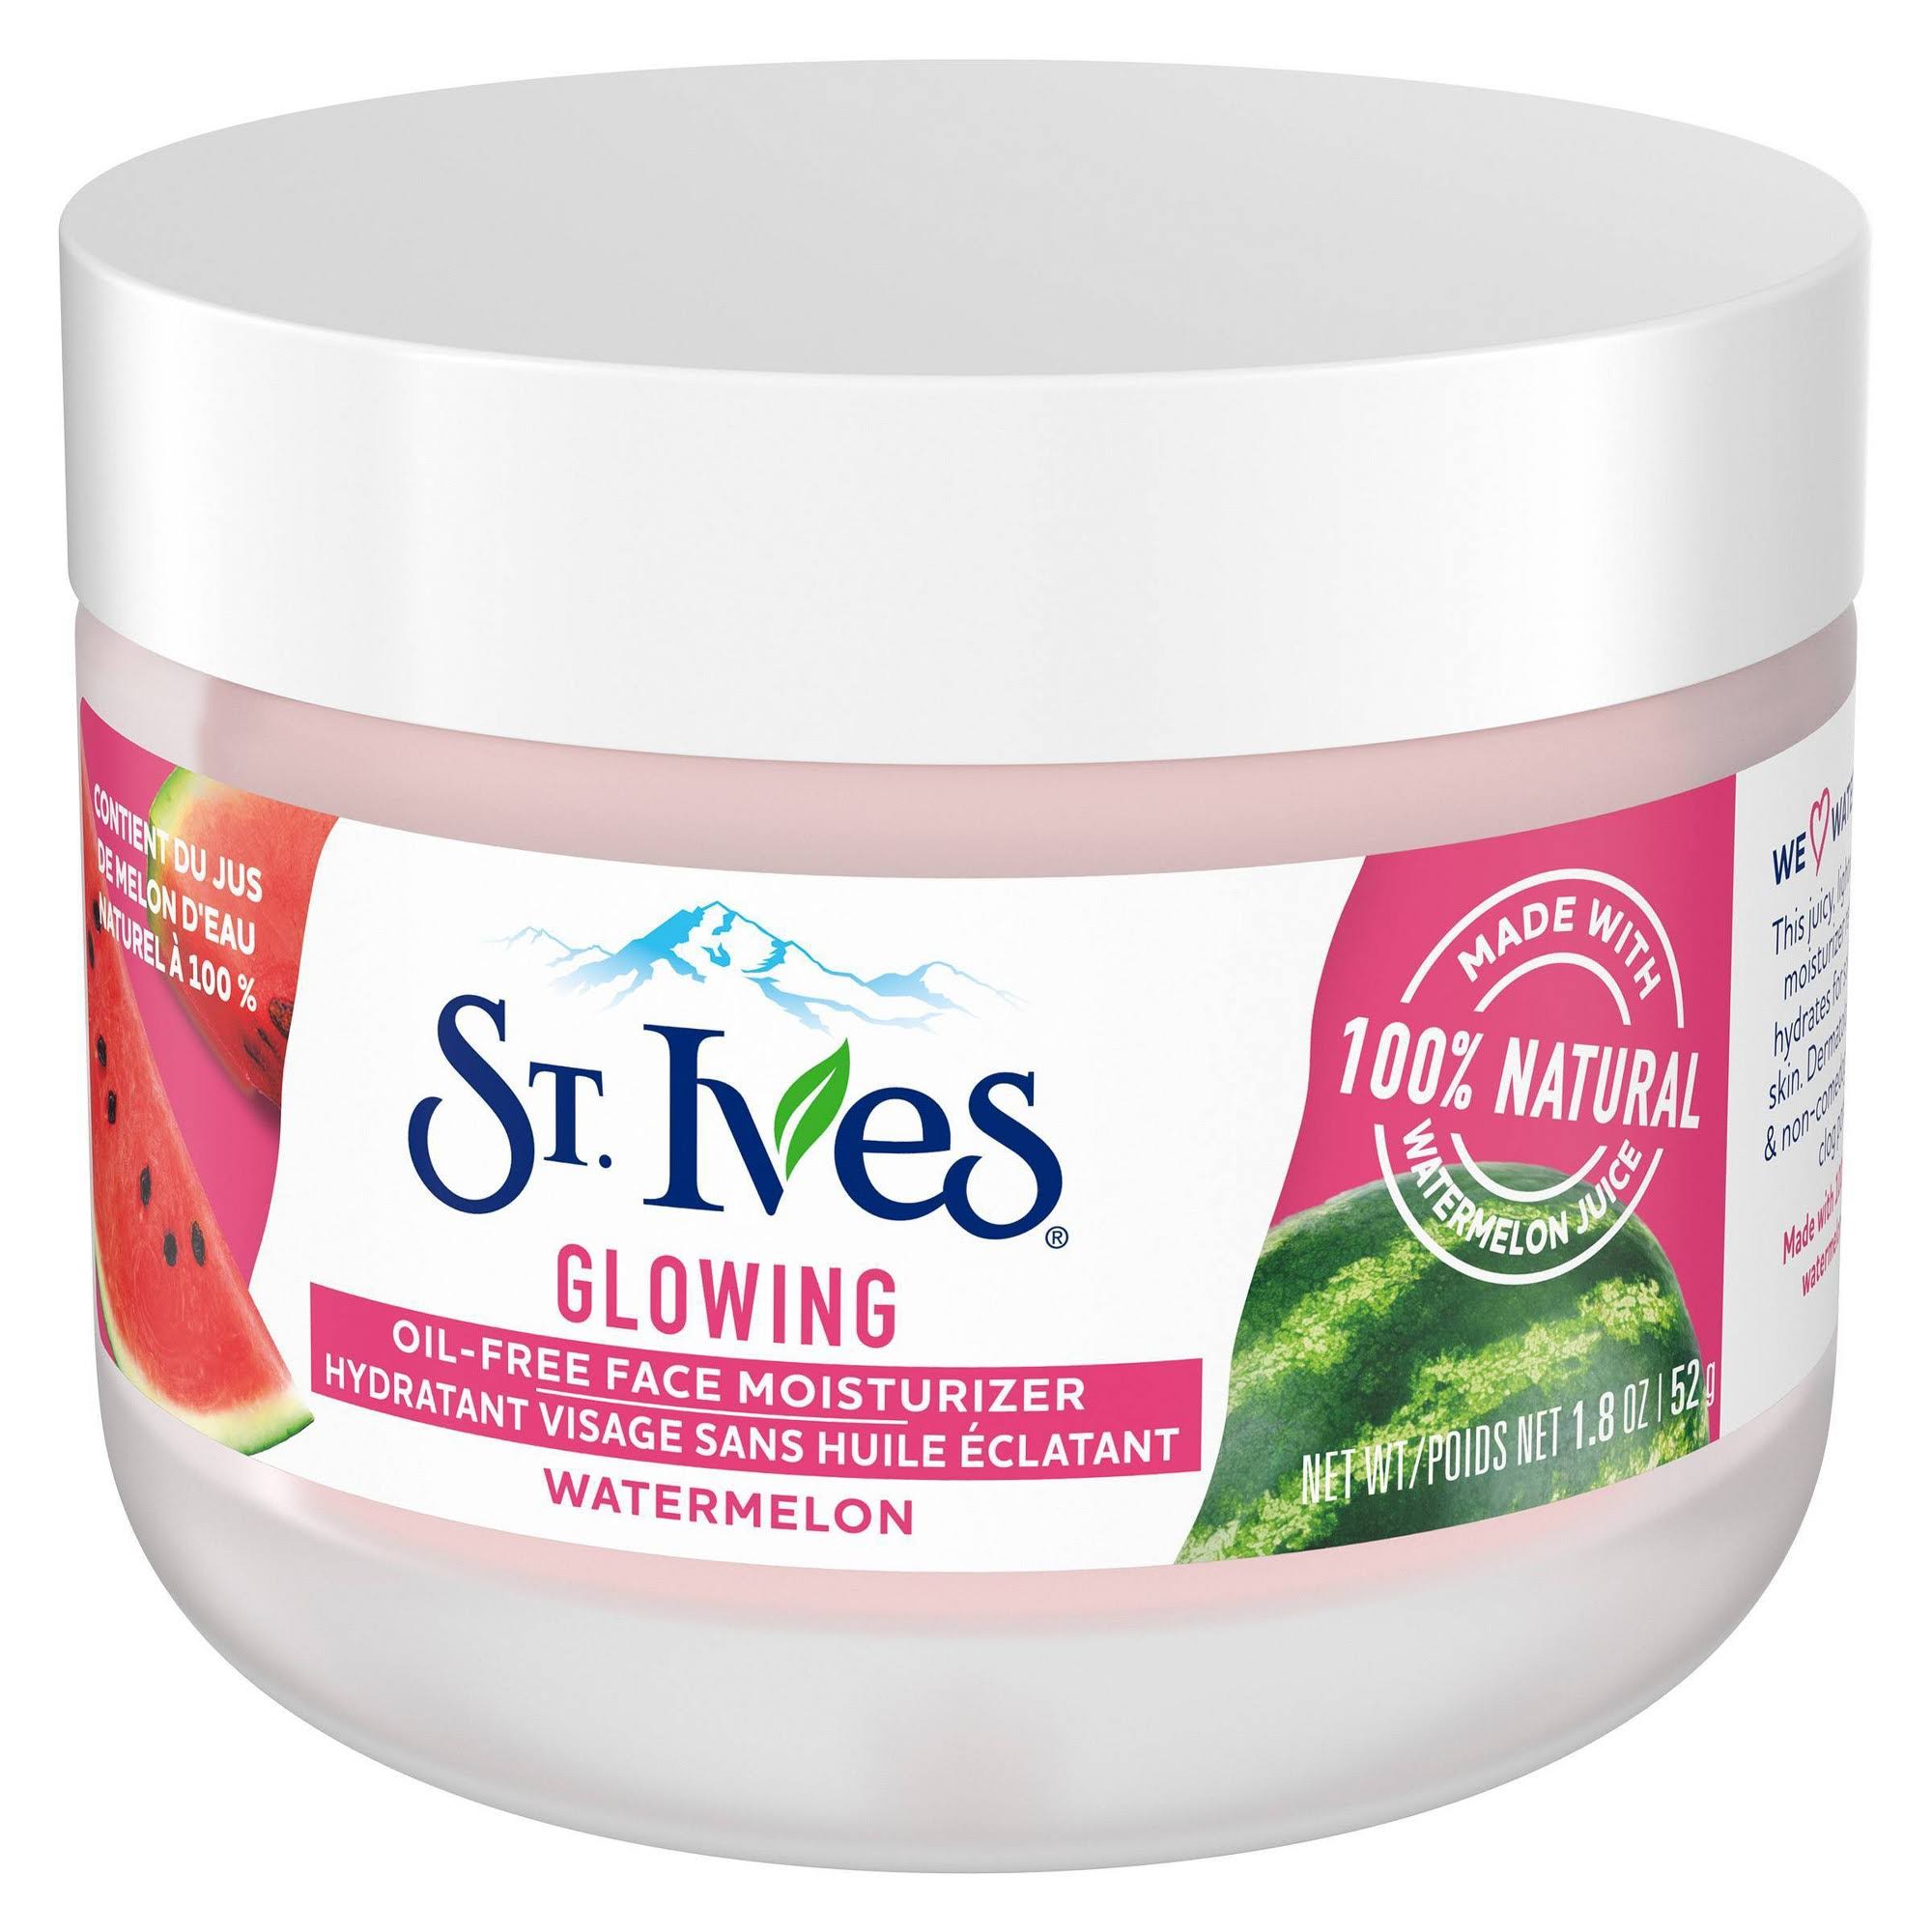 St. Ives Watermelon Face Moisturizer - 1.8 oz